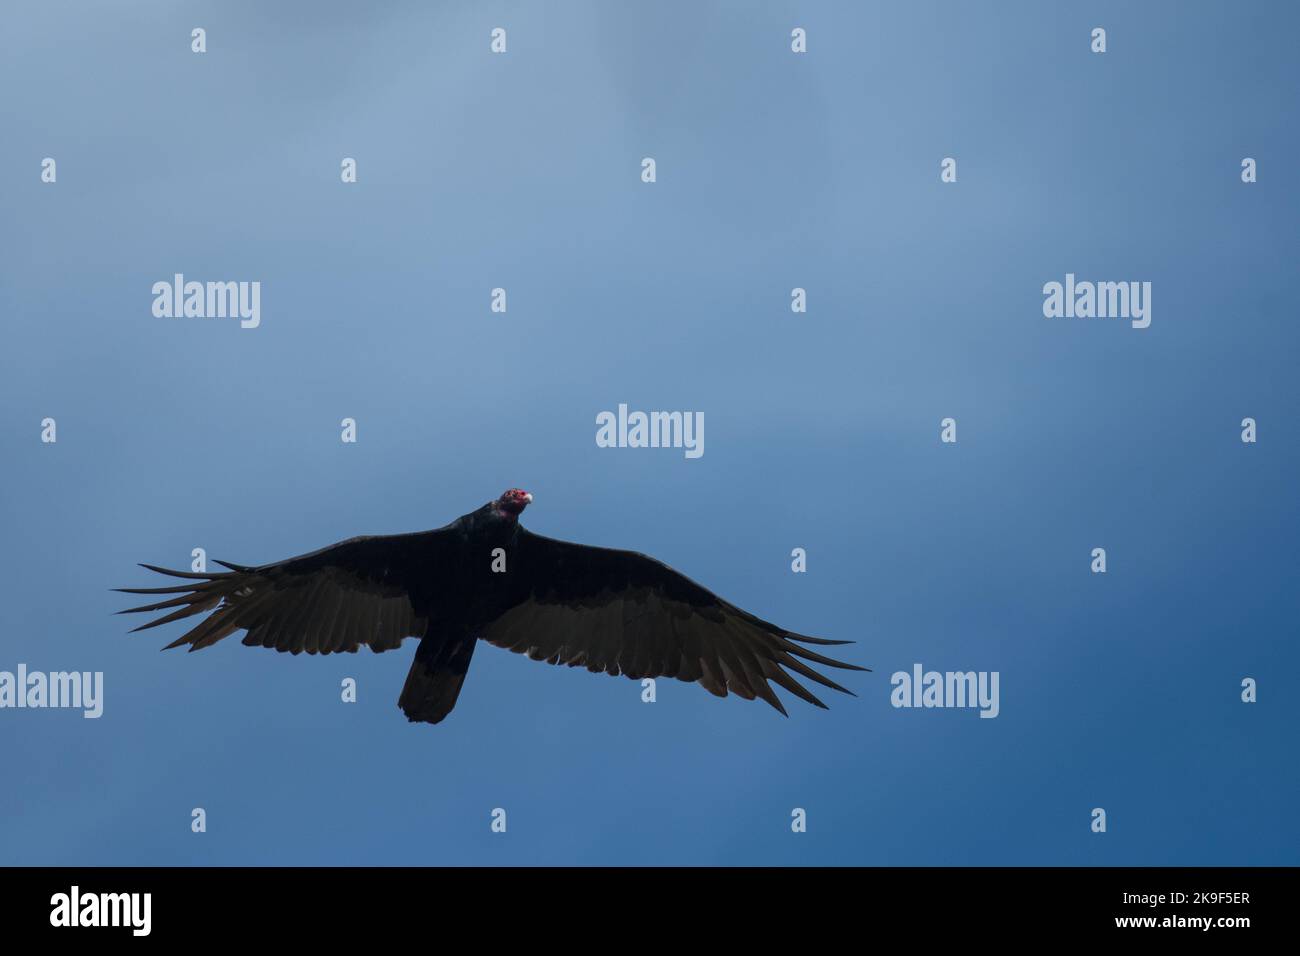 Turkey Vulture flying through bright blue skies Stock Photo